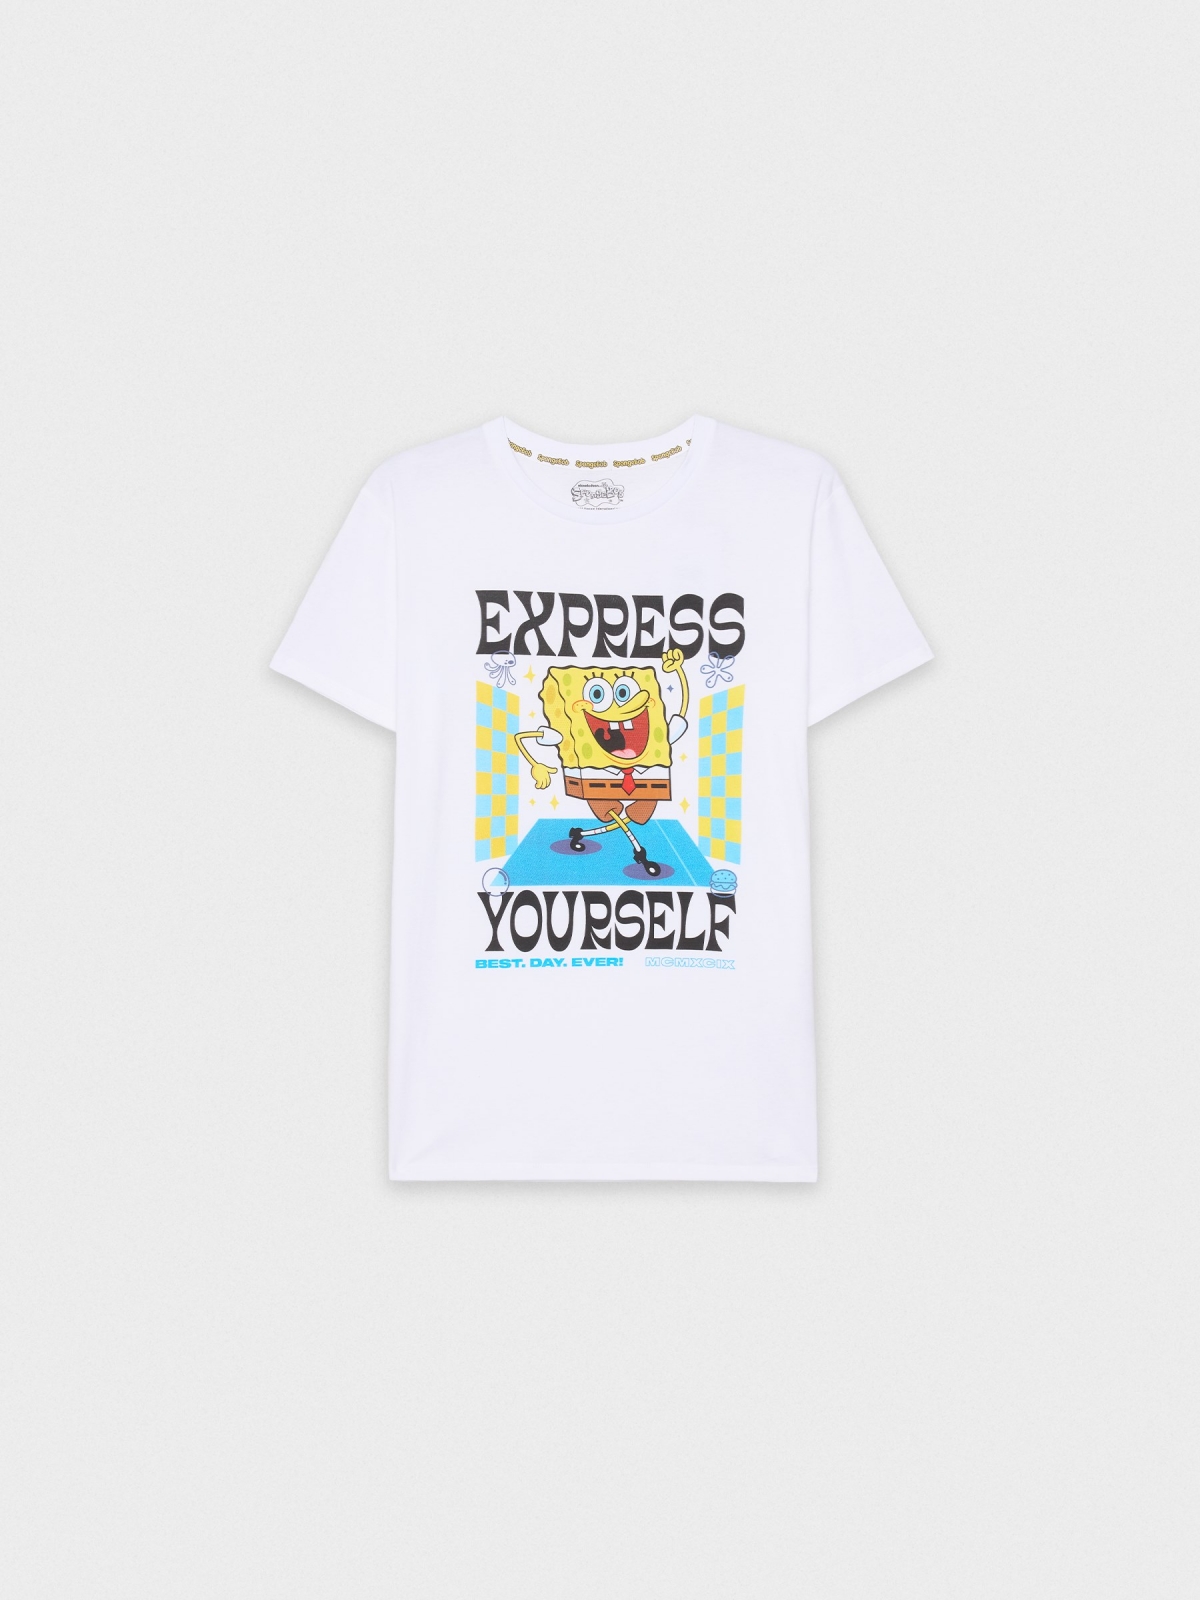  T-Shirt do Bob Esponja branco